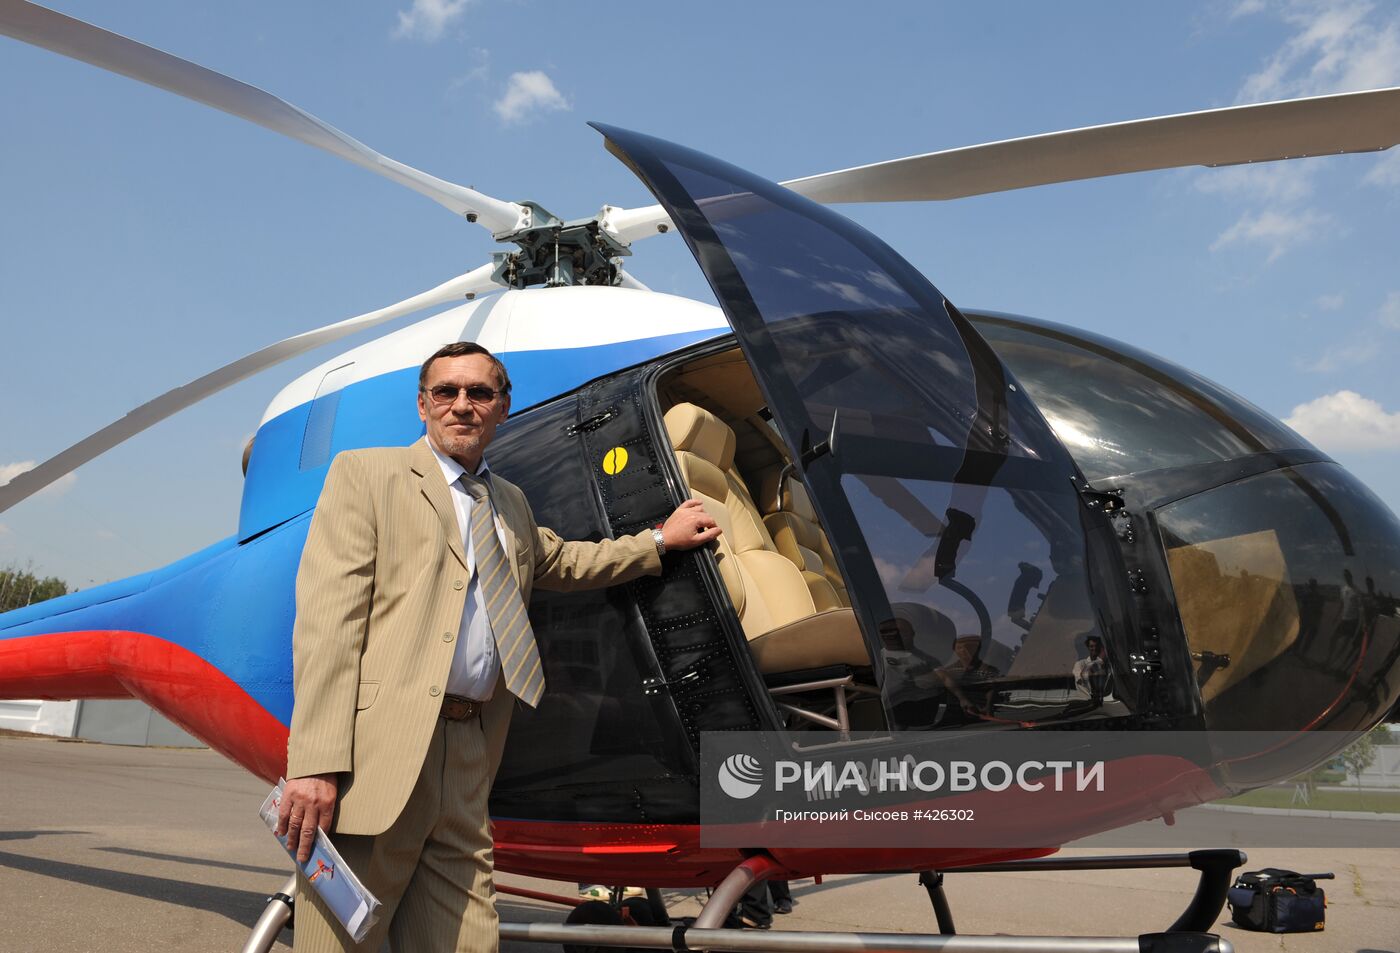 Презентация нового вертолета Ми-34 "Сапсан"